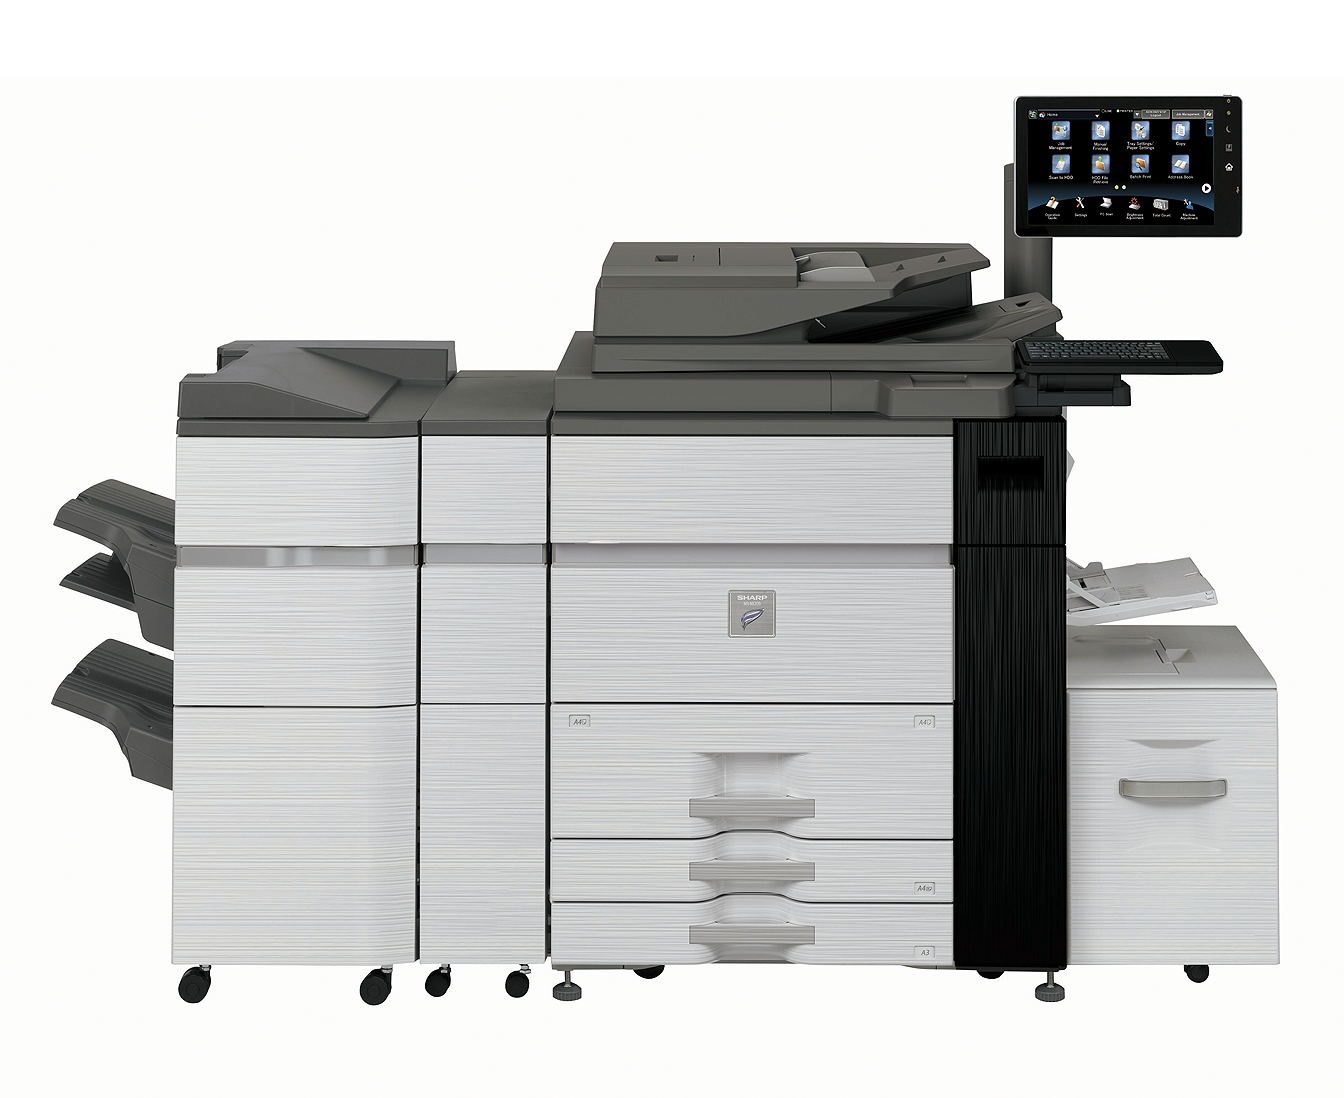 Sharp MXM1055 Monochrome Digital Multifunction Printer Copier Scanner With 105 Pages Per Minute